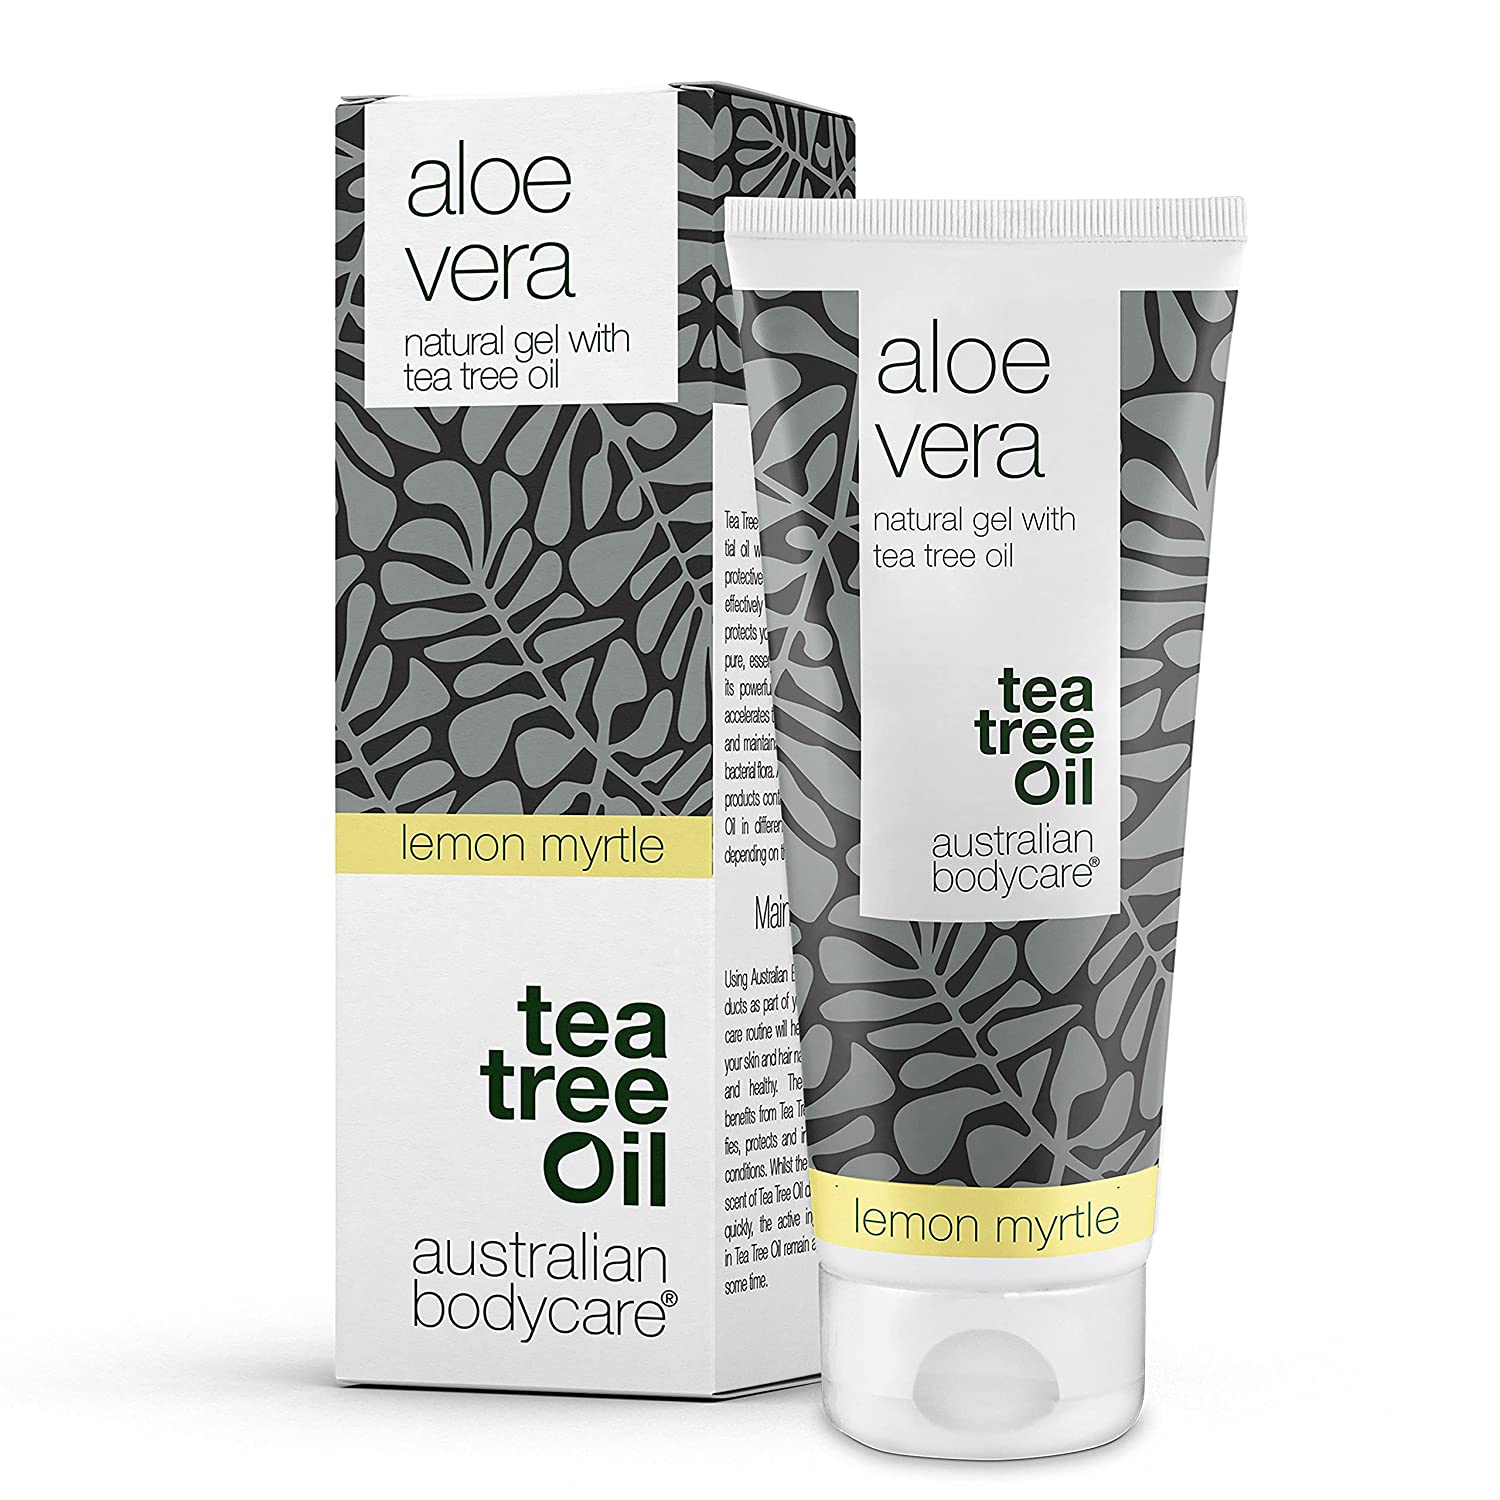 tea tree oil australian bodycare Australian Bodycare Aloe Vera Gel 100 ml | Aloe Vera After Sun Balm | Natural Aloe Vera, Tea Tree Oil & Lemon Myrtle | Cooling & Moisturising Against Itching, Sunburn & Scars